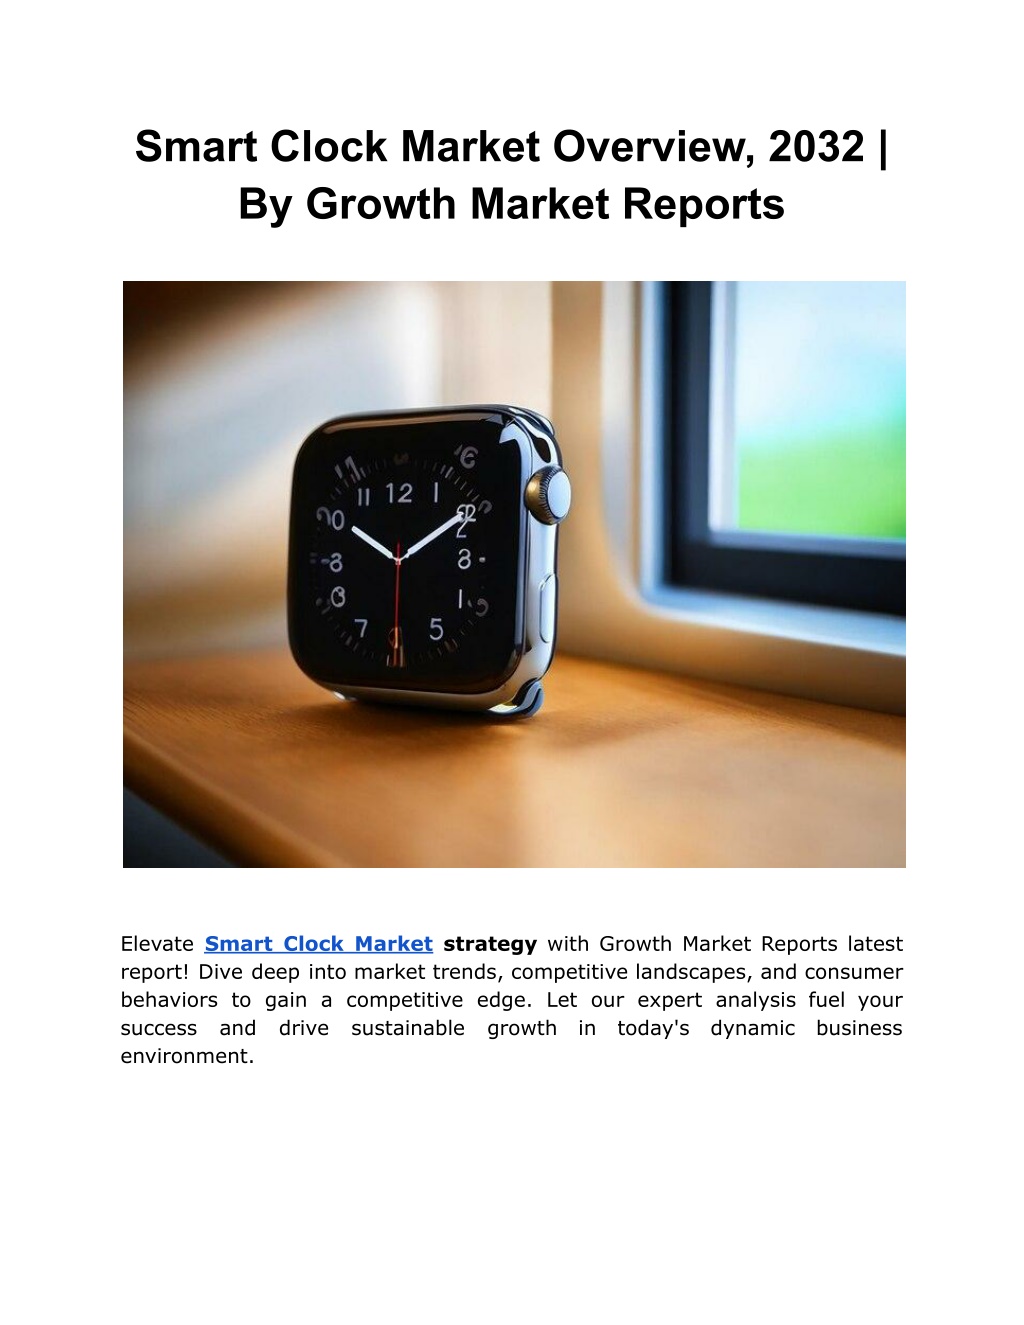 smart clock market overview 2032 by growth market l.w